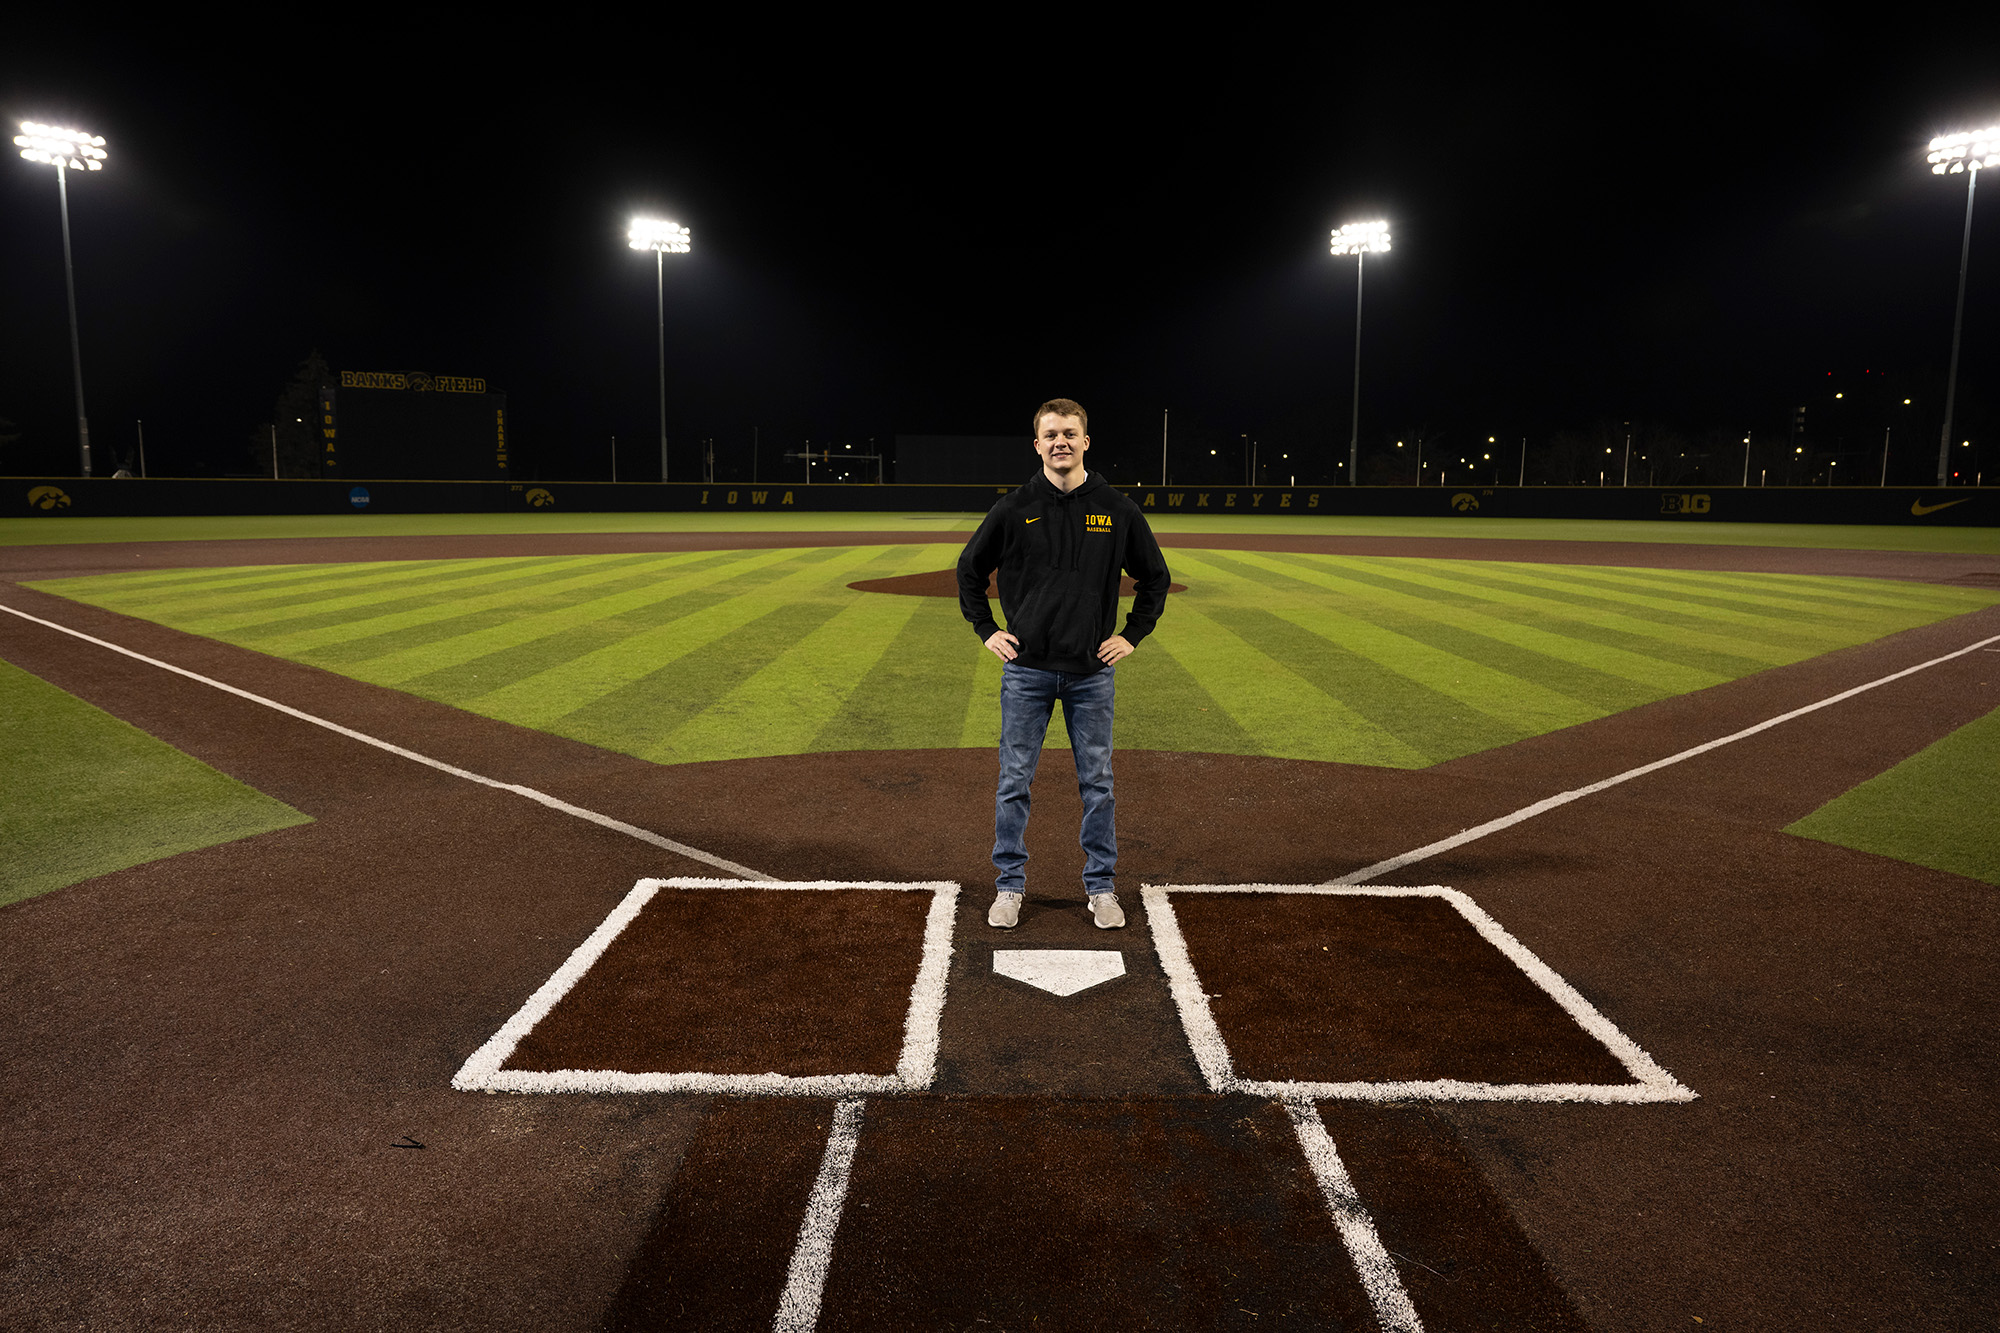 University of Iowa graduate Reed Zahradnik standing near home plate at Banks Field, the University of Iowa baseball facility